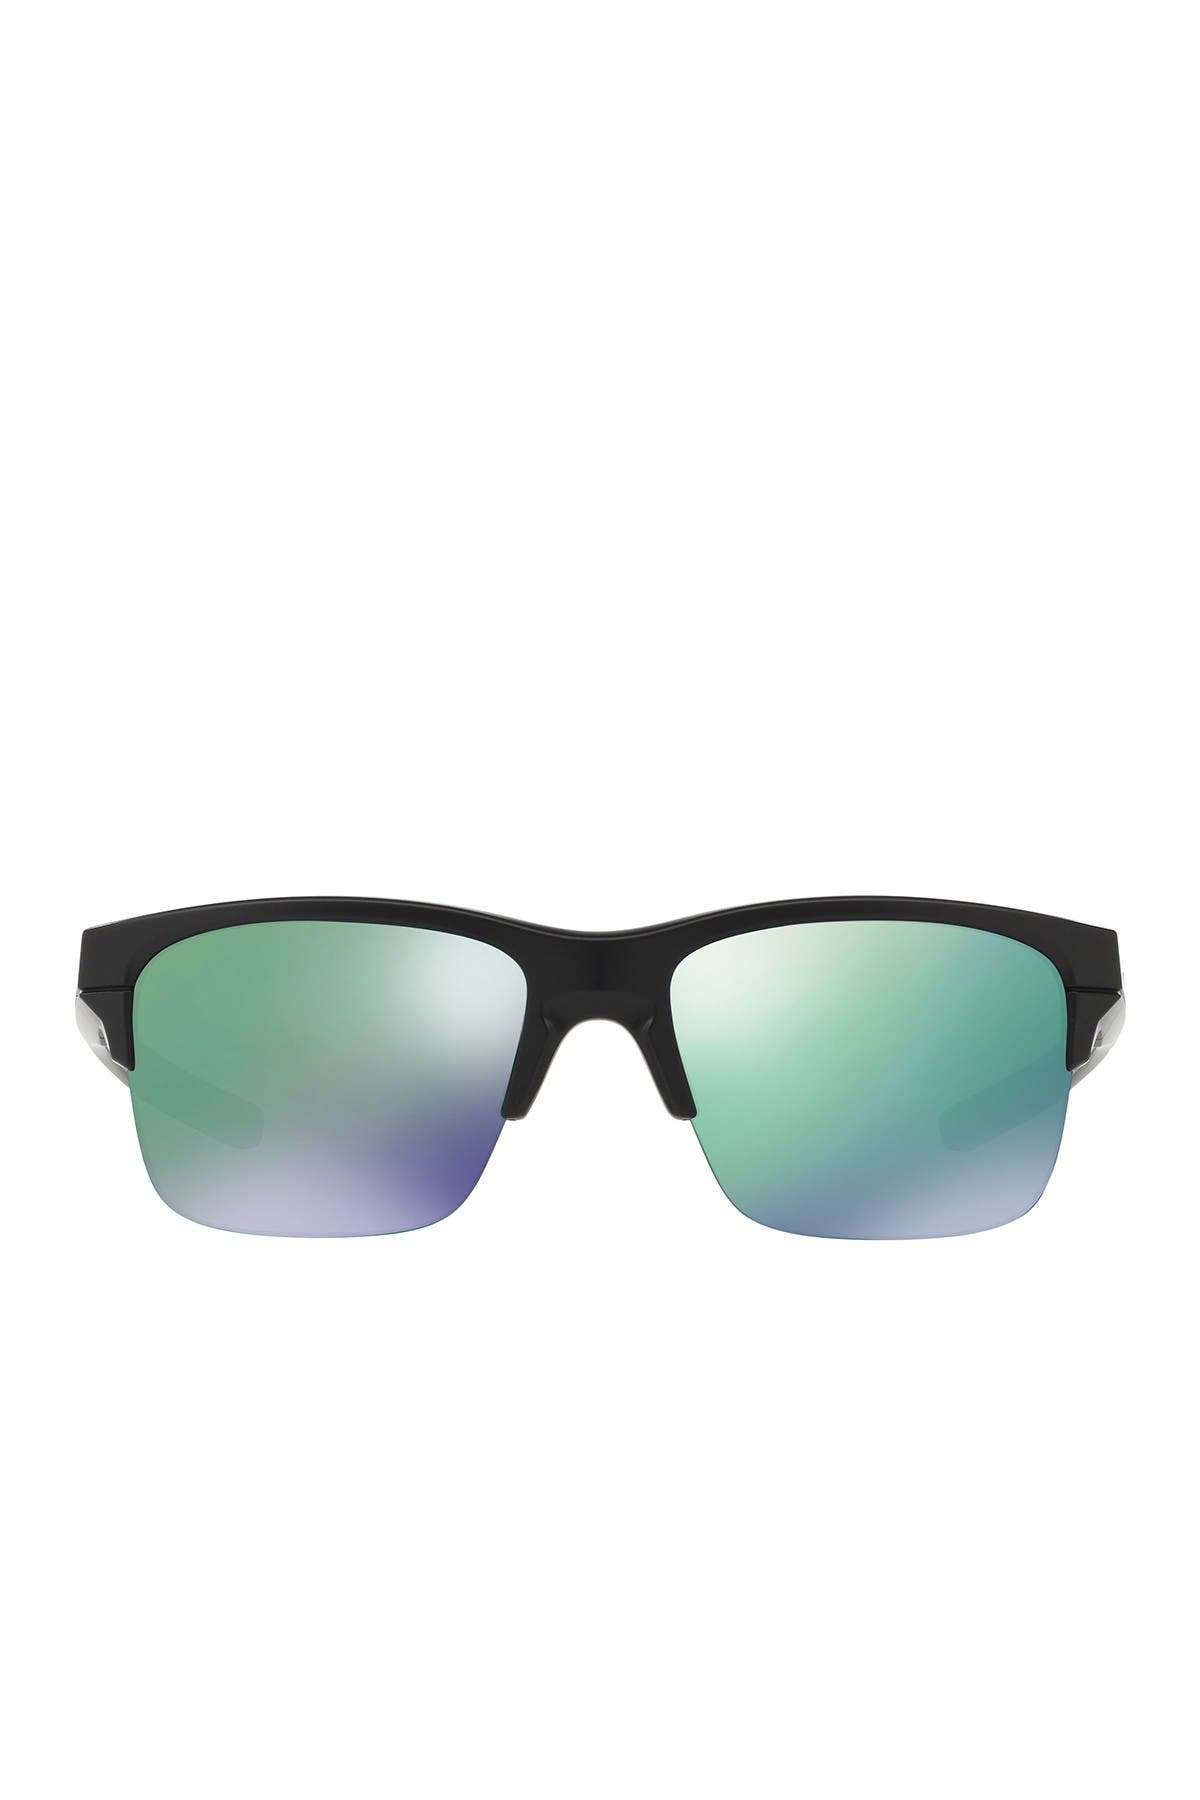 oakley thinlink sunglasses